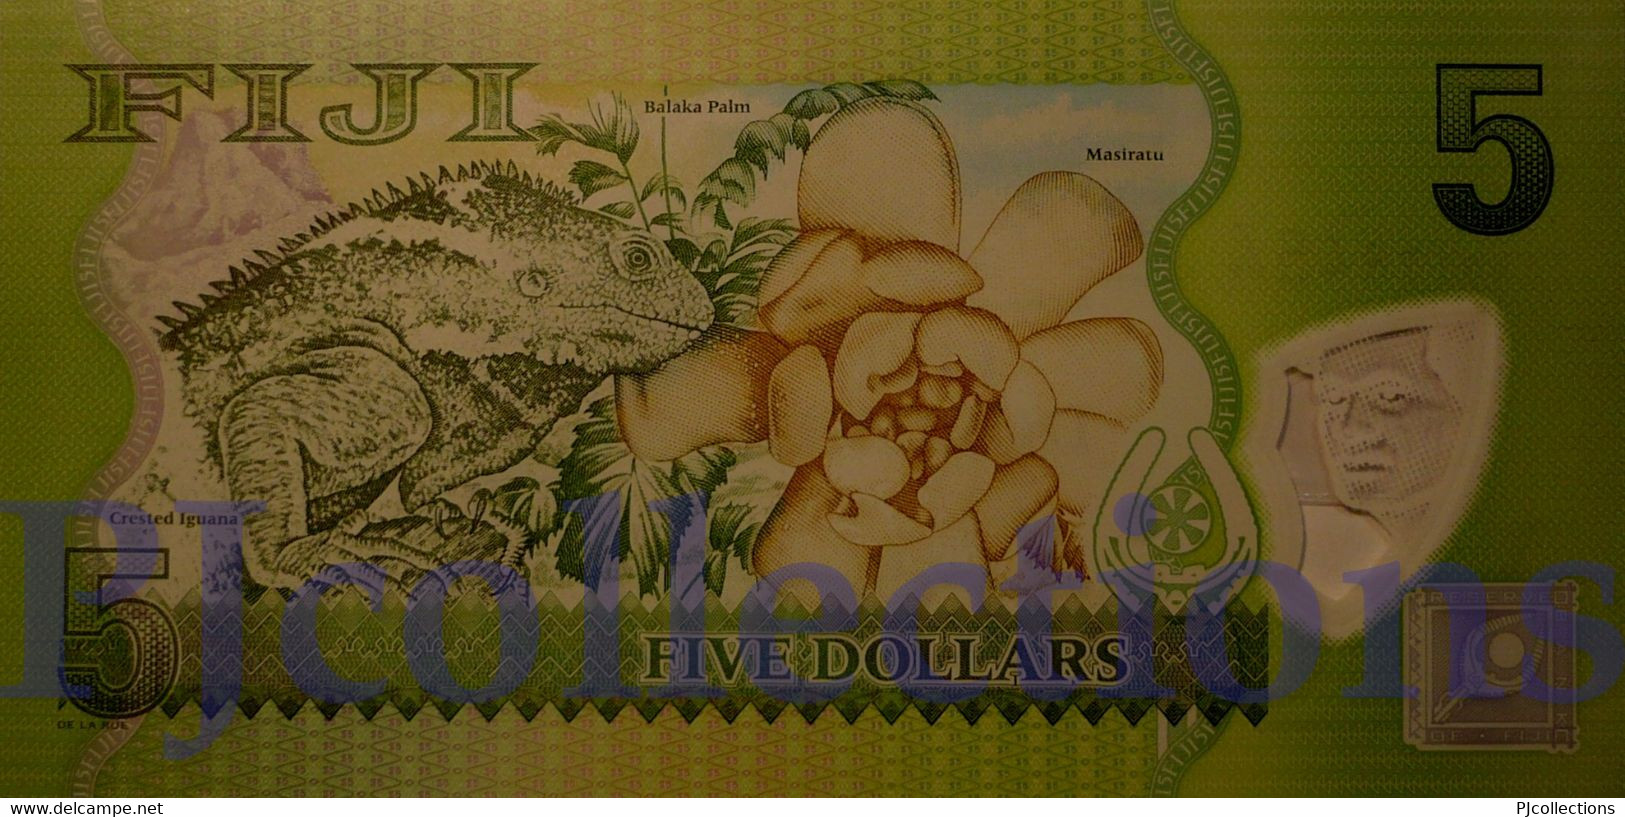 FIJI 5 DOLLARS 2013 PICK 115r POLYMER UNC REPLACEMENT - Figi